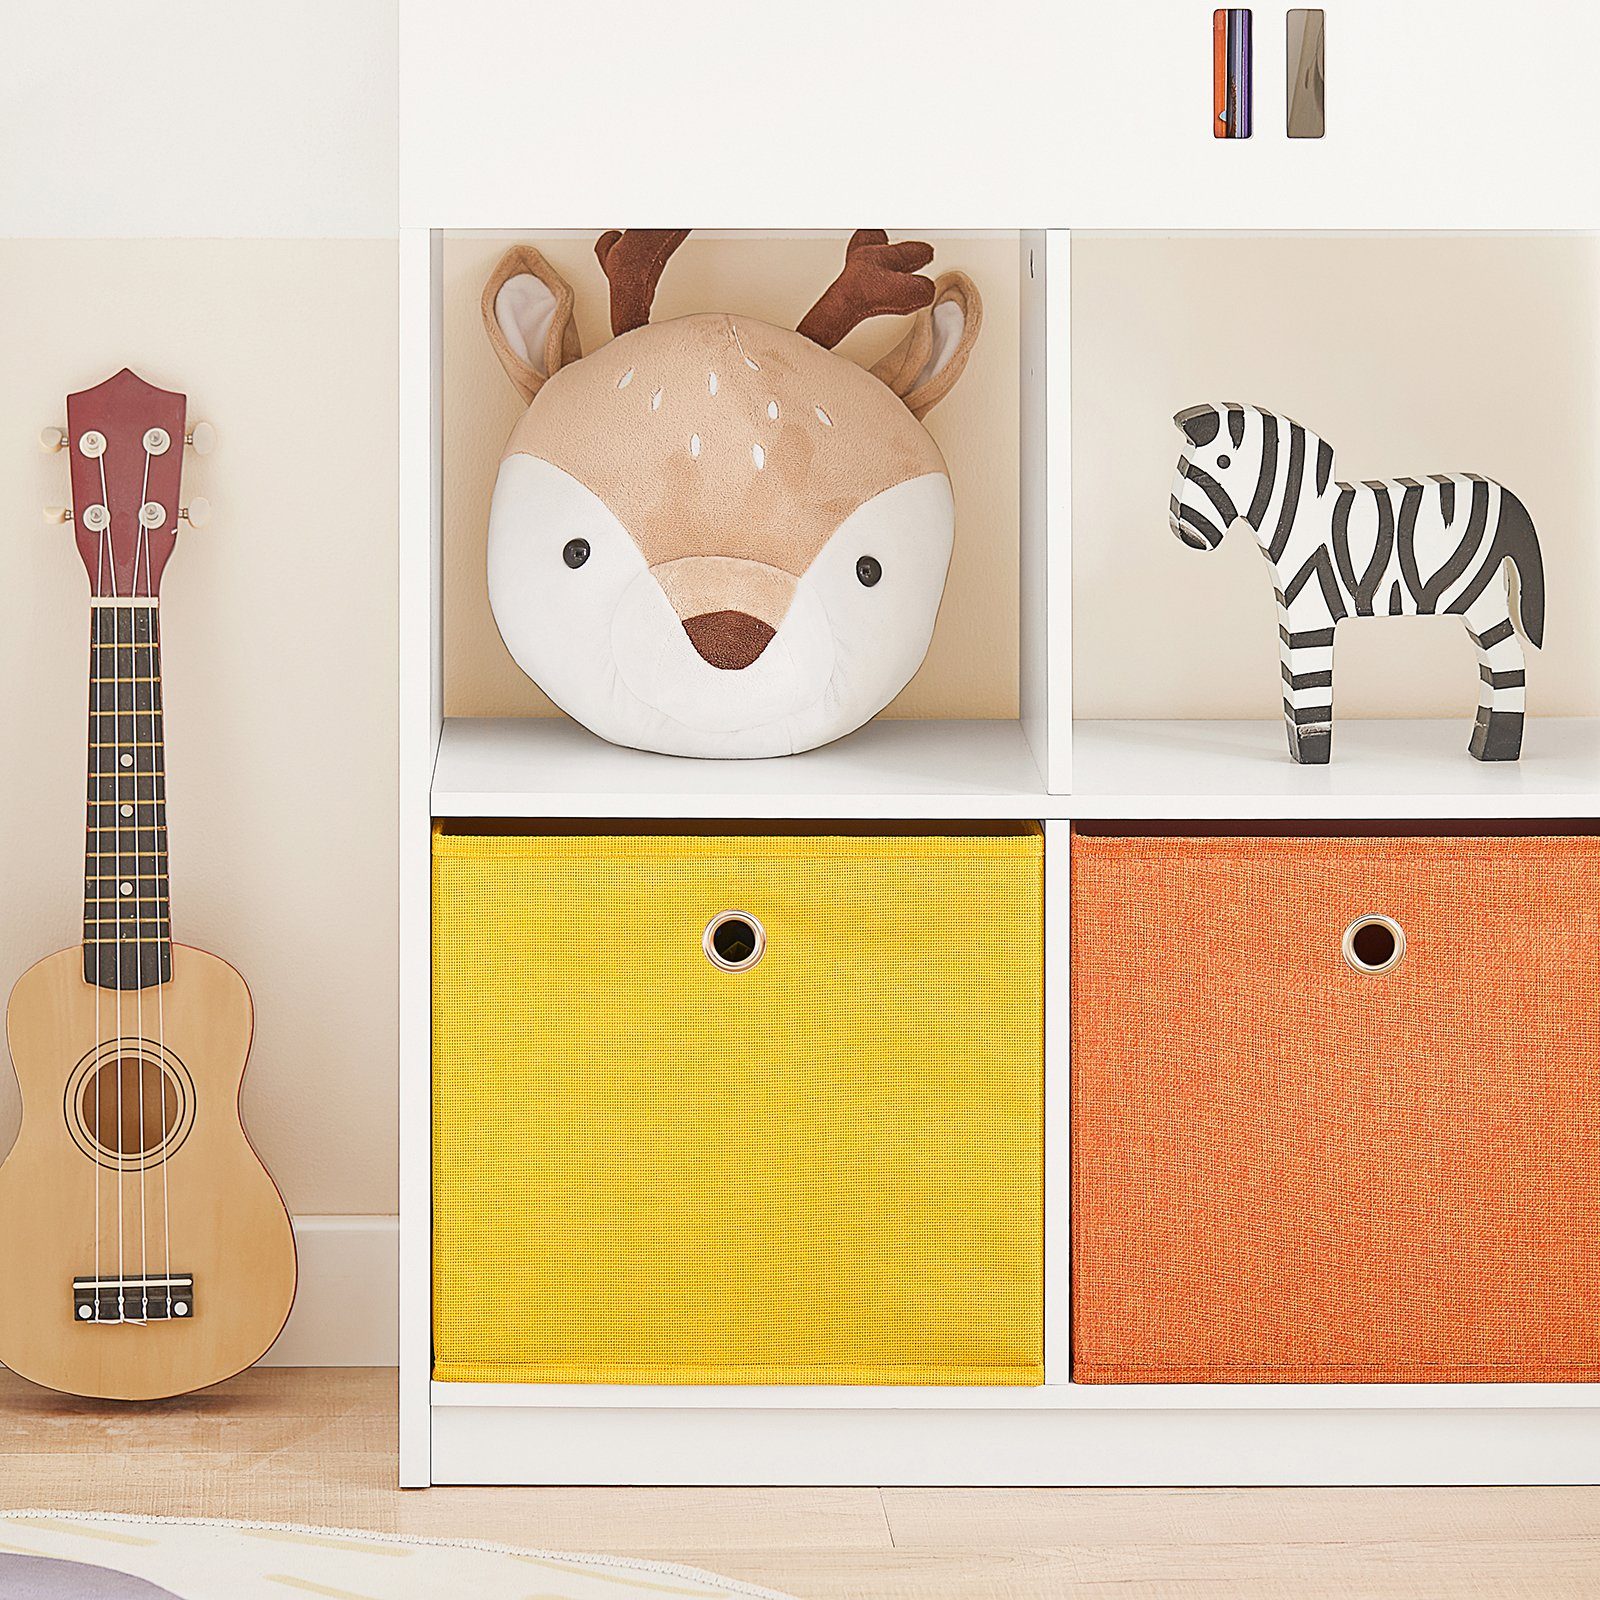 mit mit KMB49, Spielzeugregal Haus-Design Stoffboxen 2 SoBuy Kinderregal Bücherregal